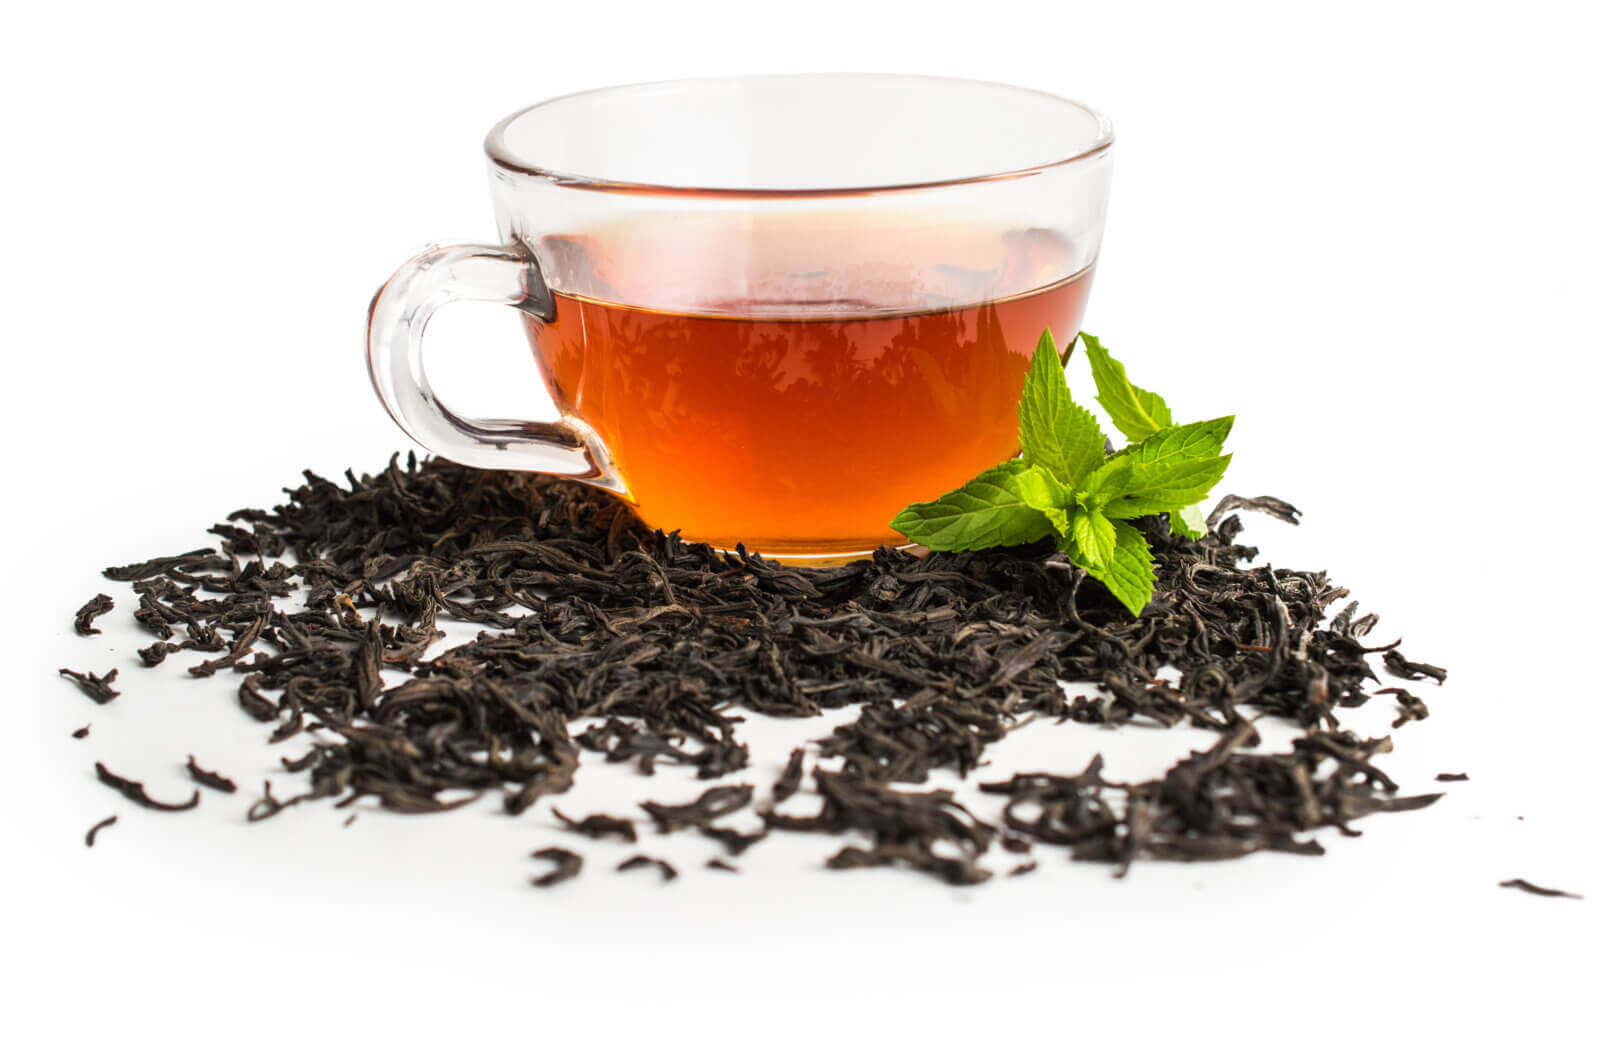 Tea Leaves surrounding a glass of black tea